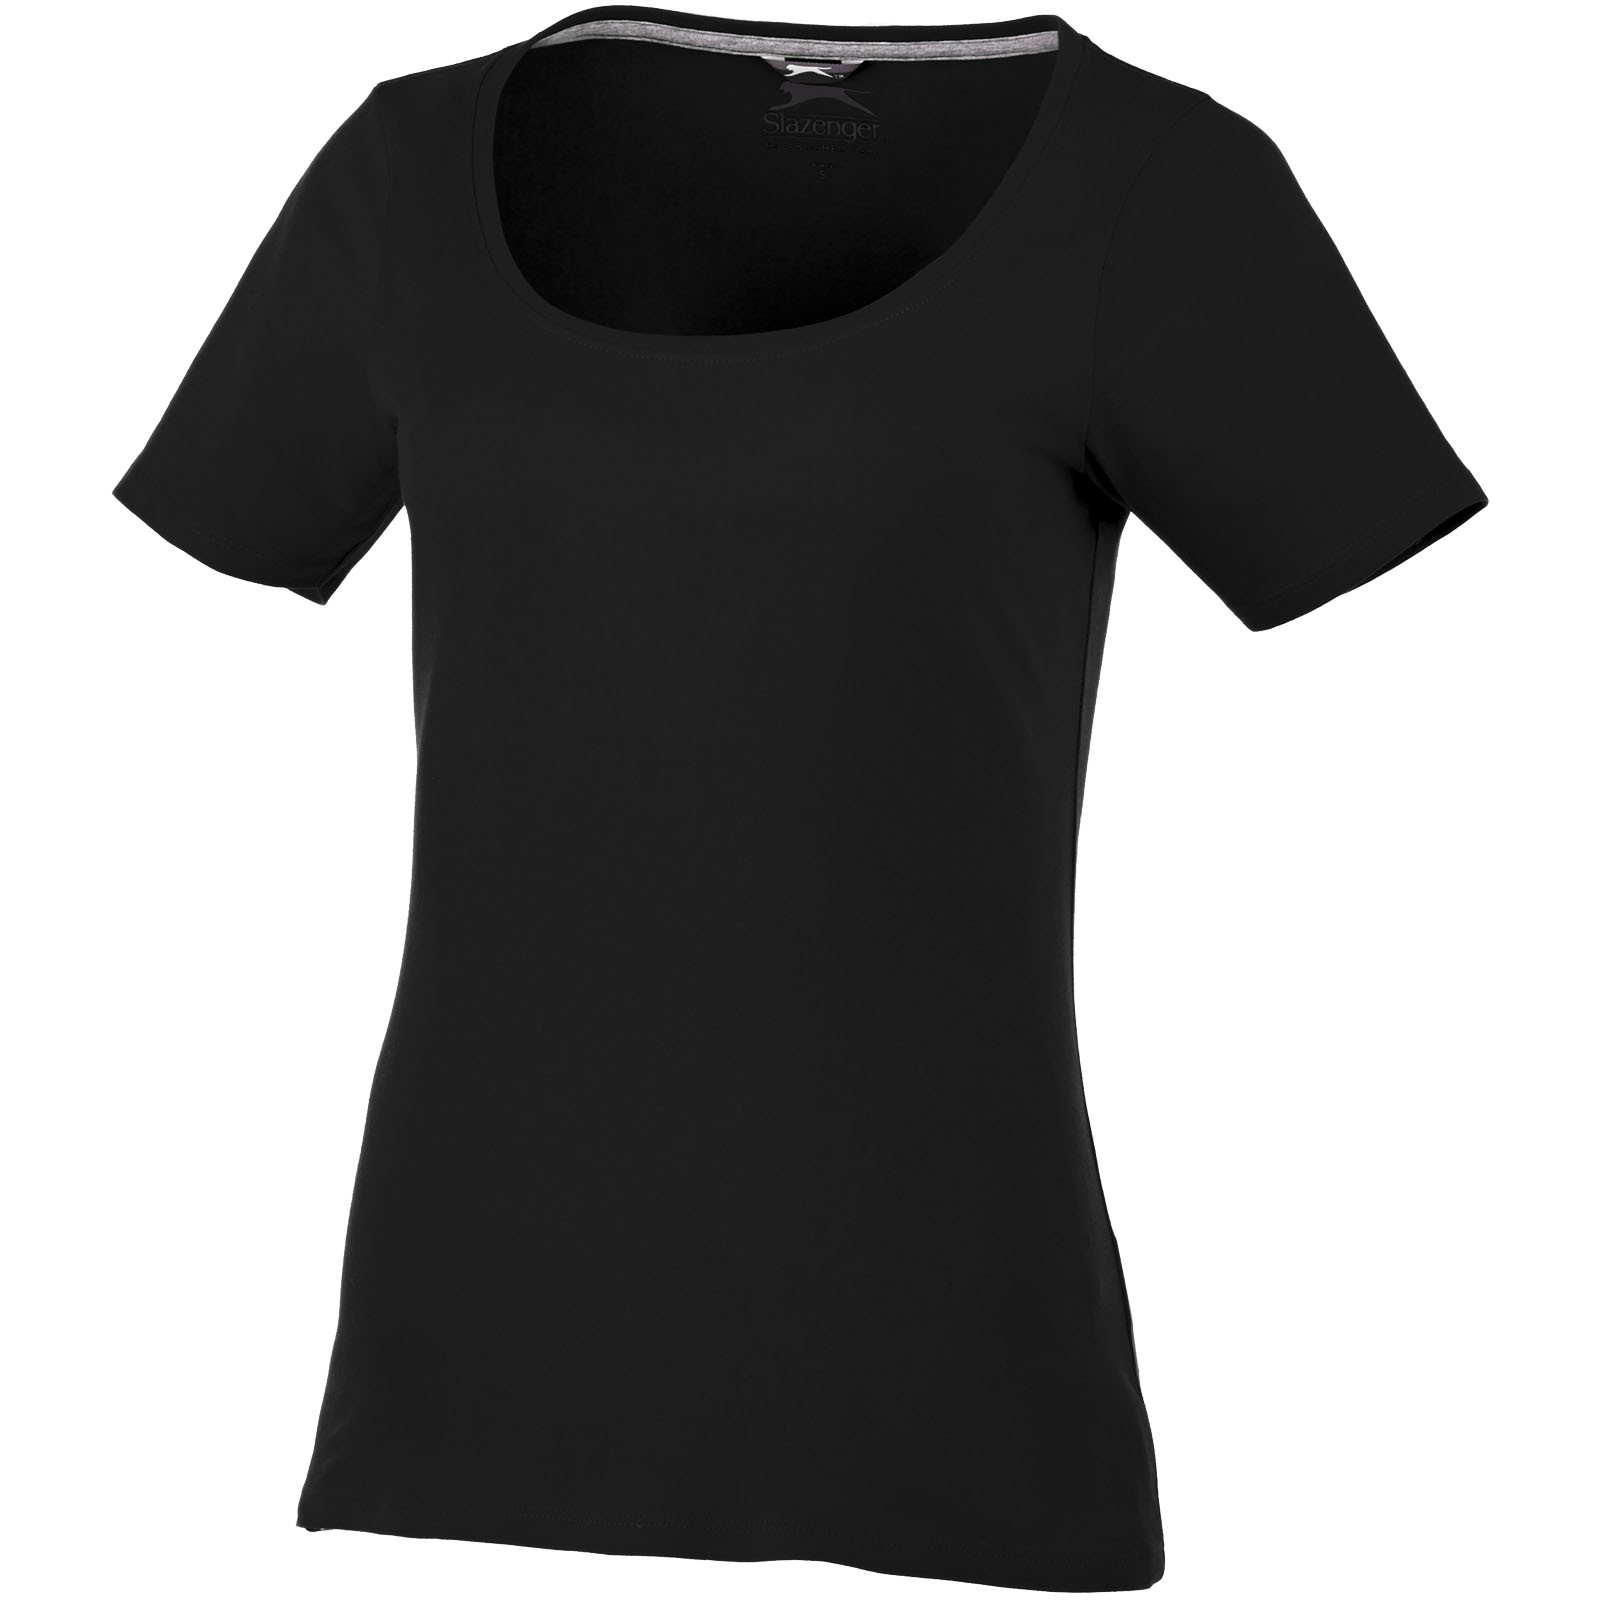 Bosey short sleeve women's scoop neck t-shirt - Solid Black / S